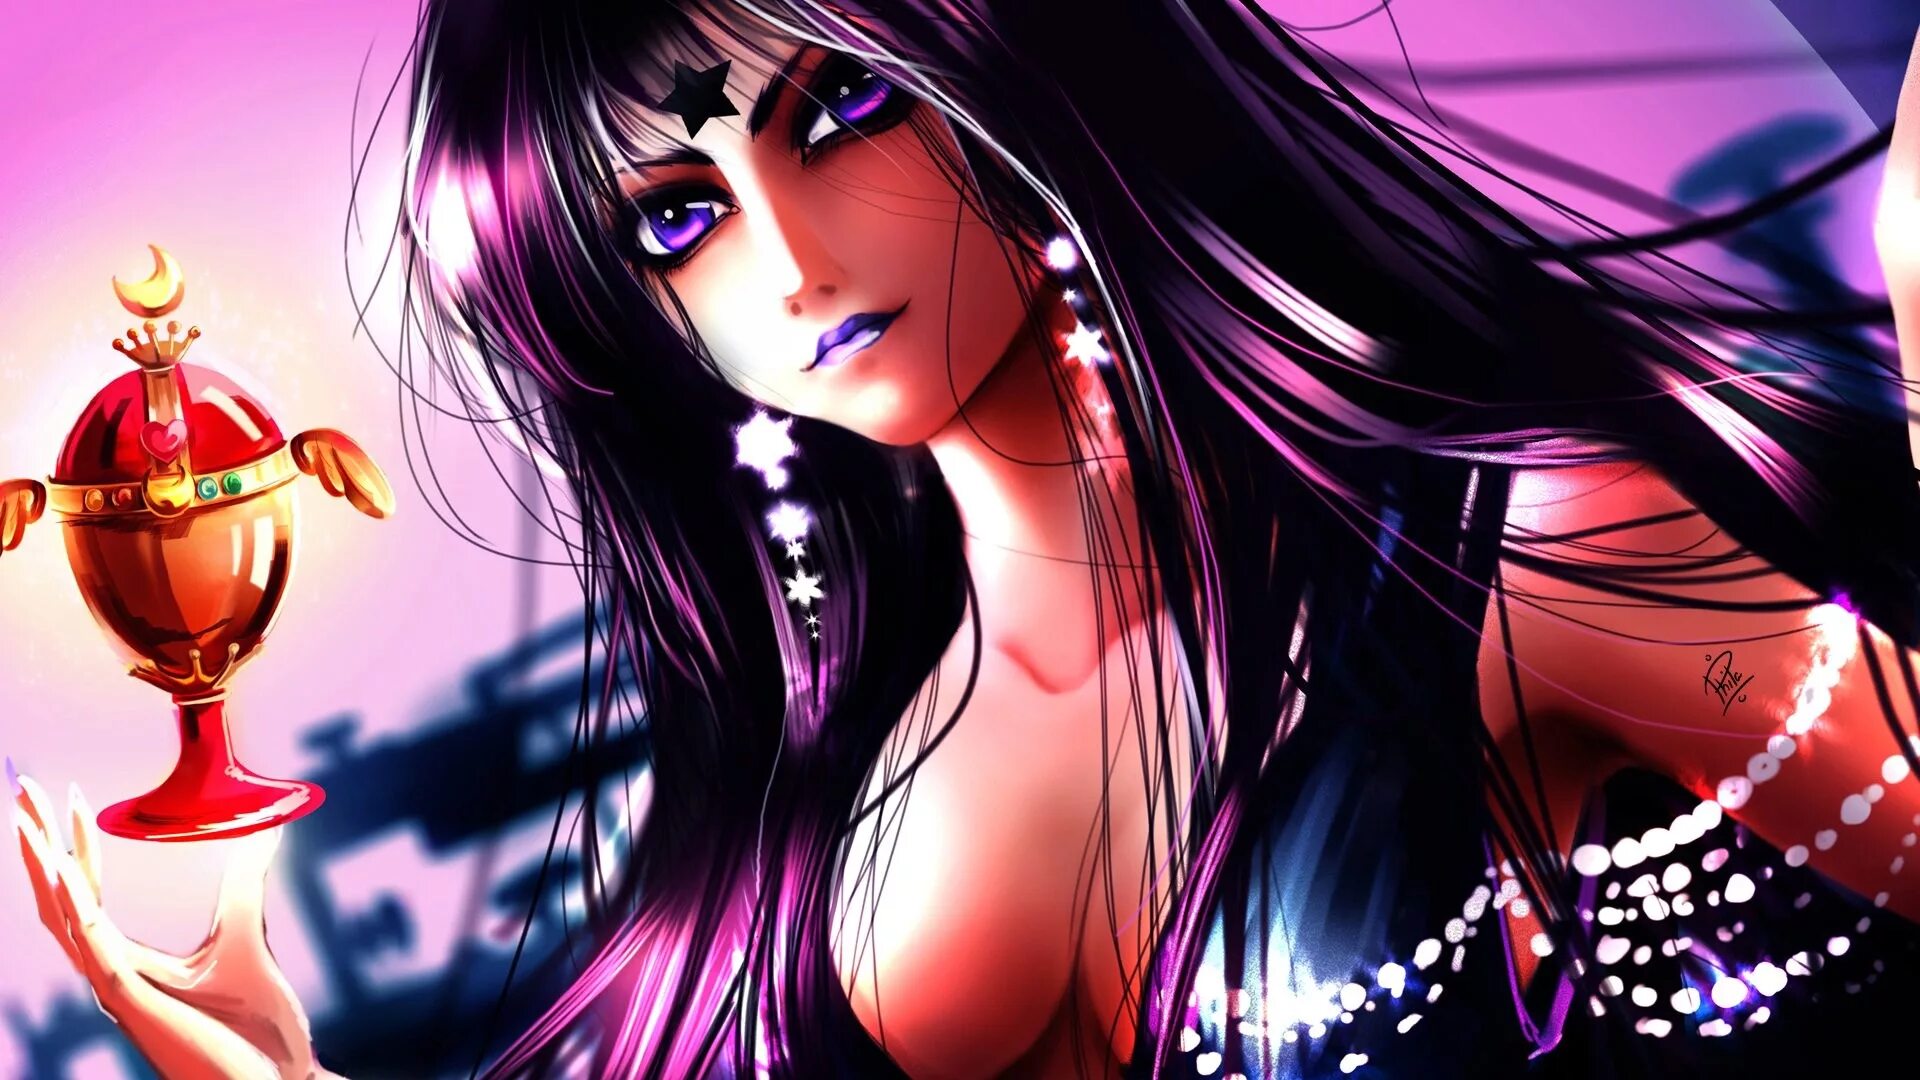 Манга принцесса гадалка 44. Девочка демон на фиолетовом фоне.